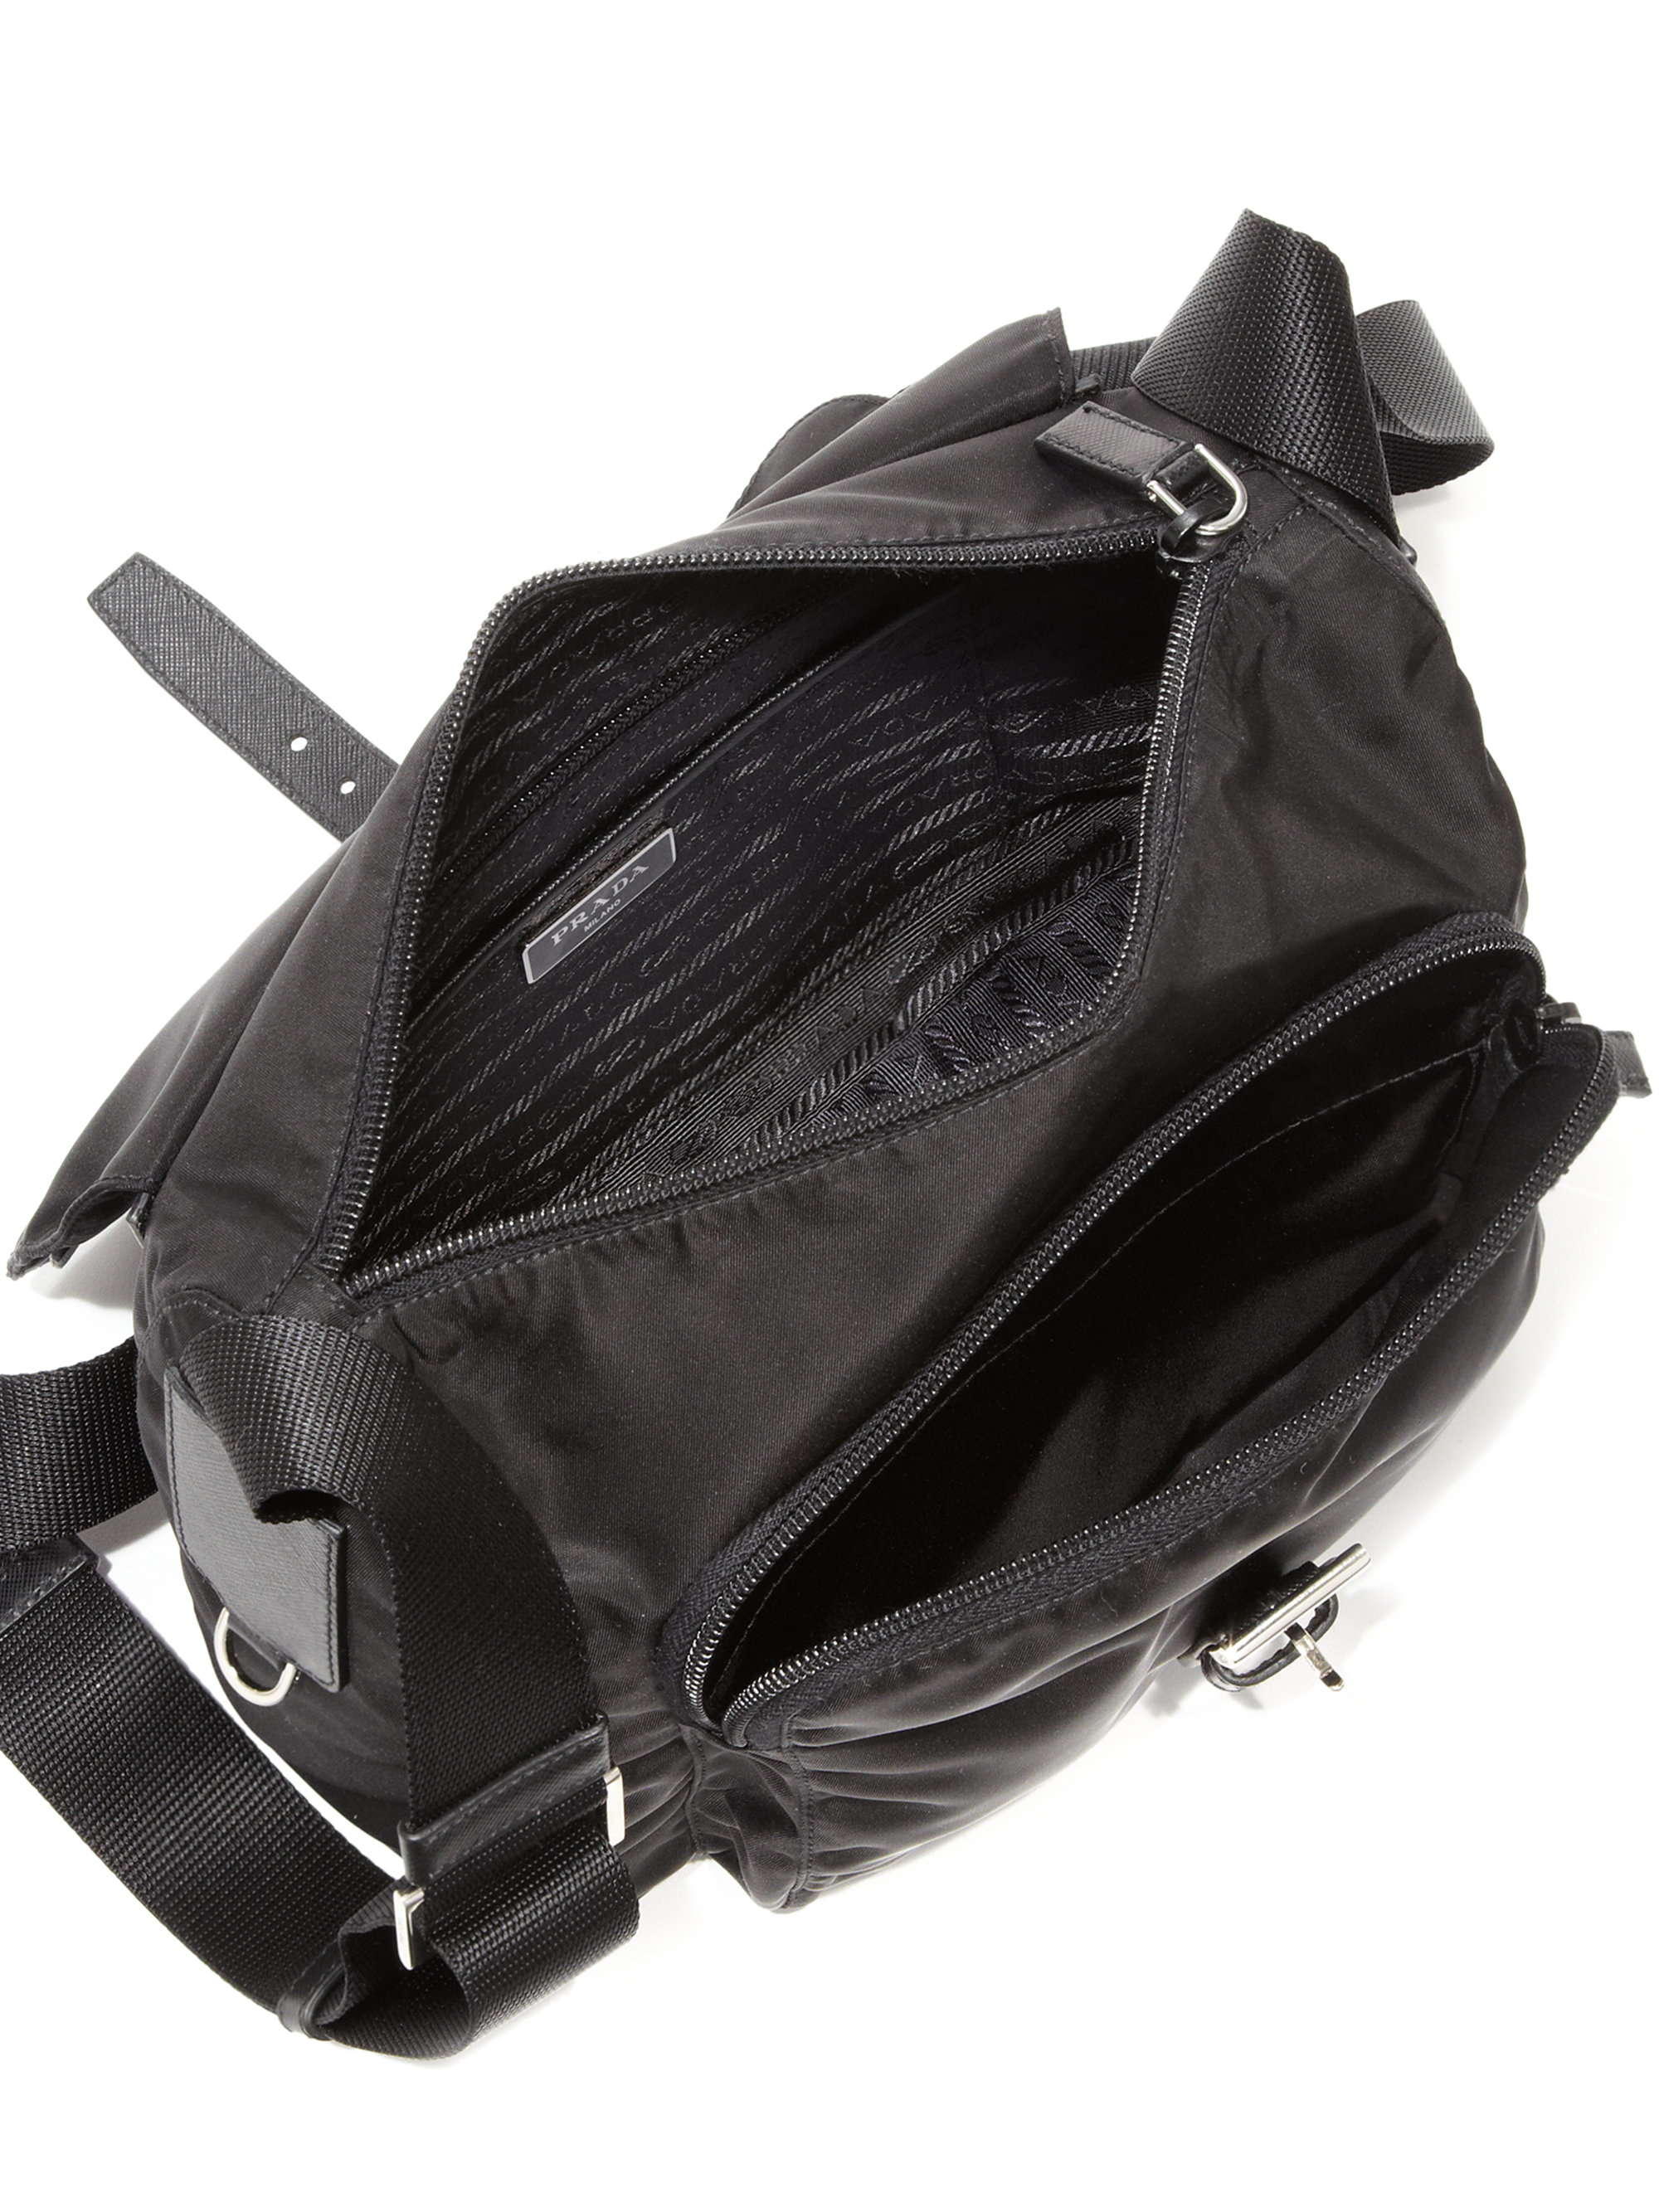 Prada Nylon \u0026amp; Leather Crossbody Bag in Black | Lyst